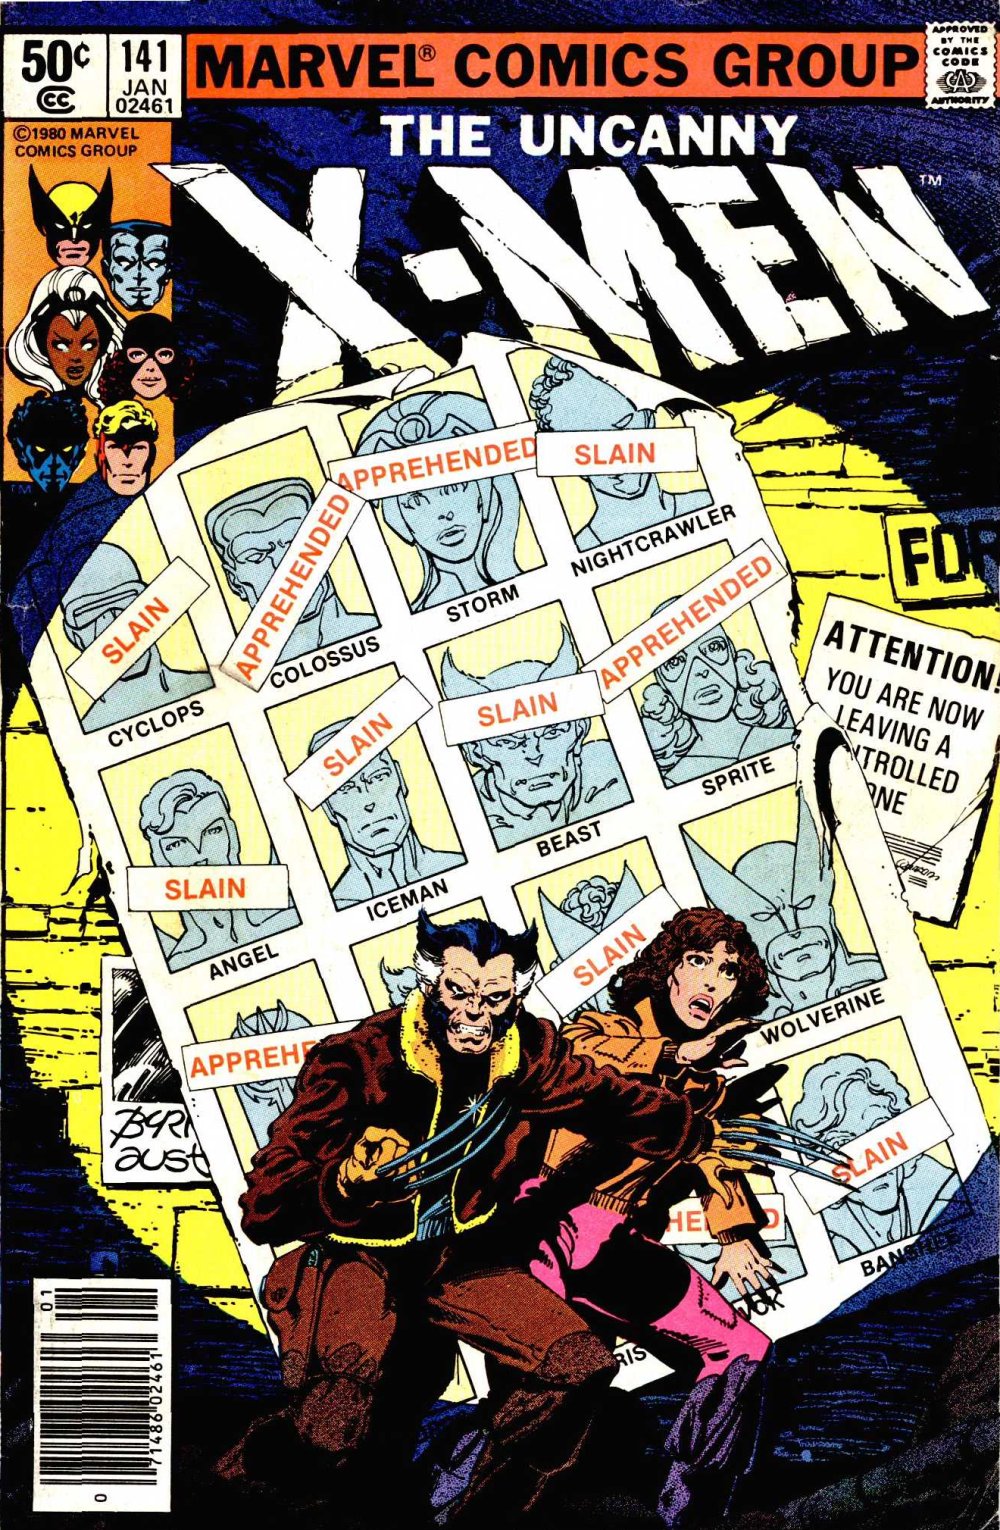 THE UNCANNY XMEN key issues 1990s Marvel 1980s